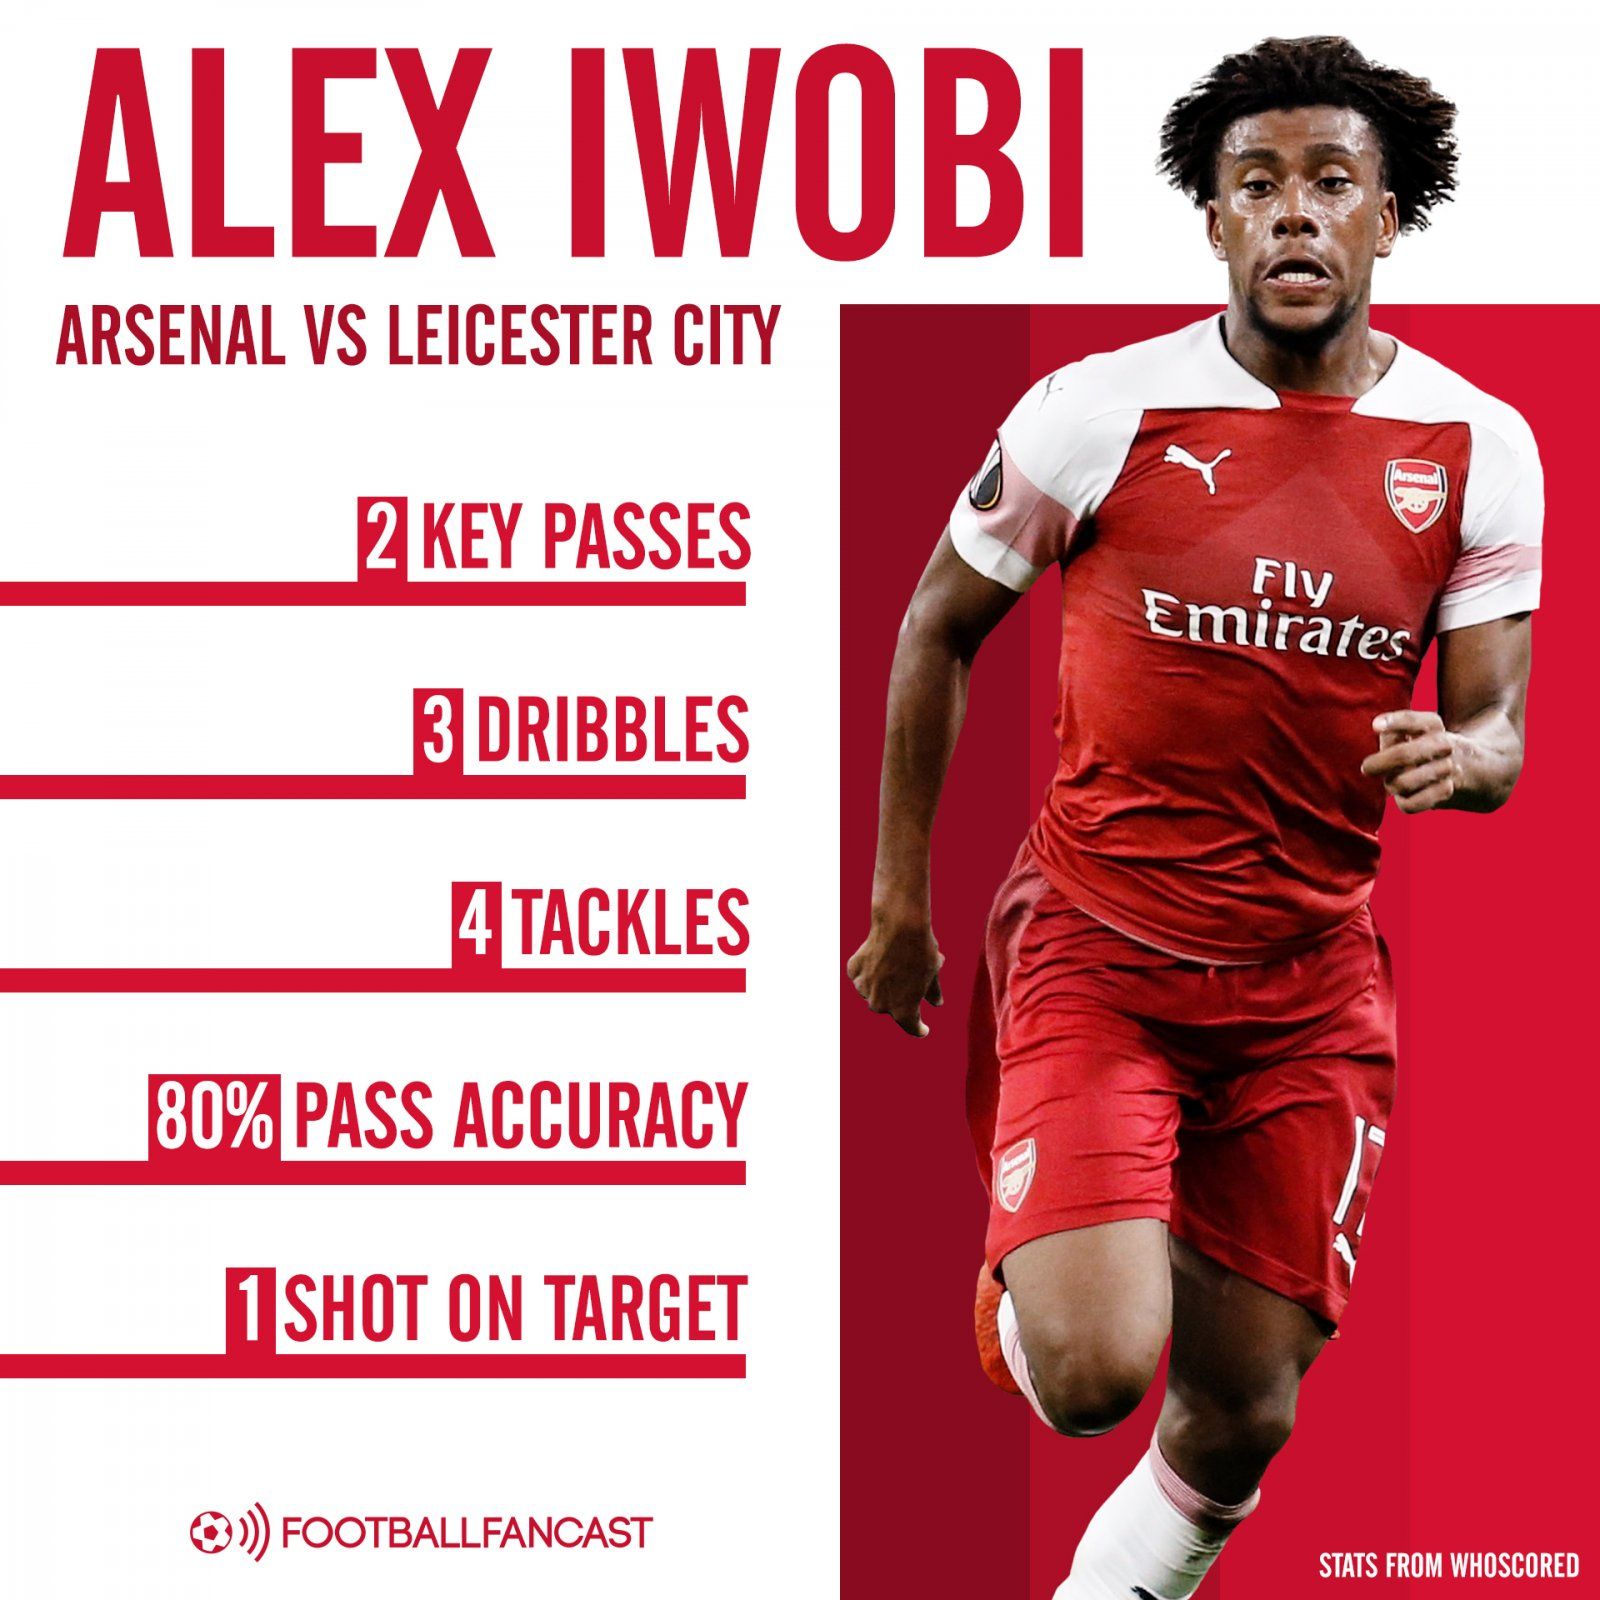 Alex Iwobi's stats vs Leicester City